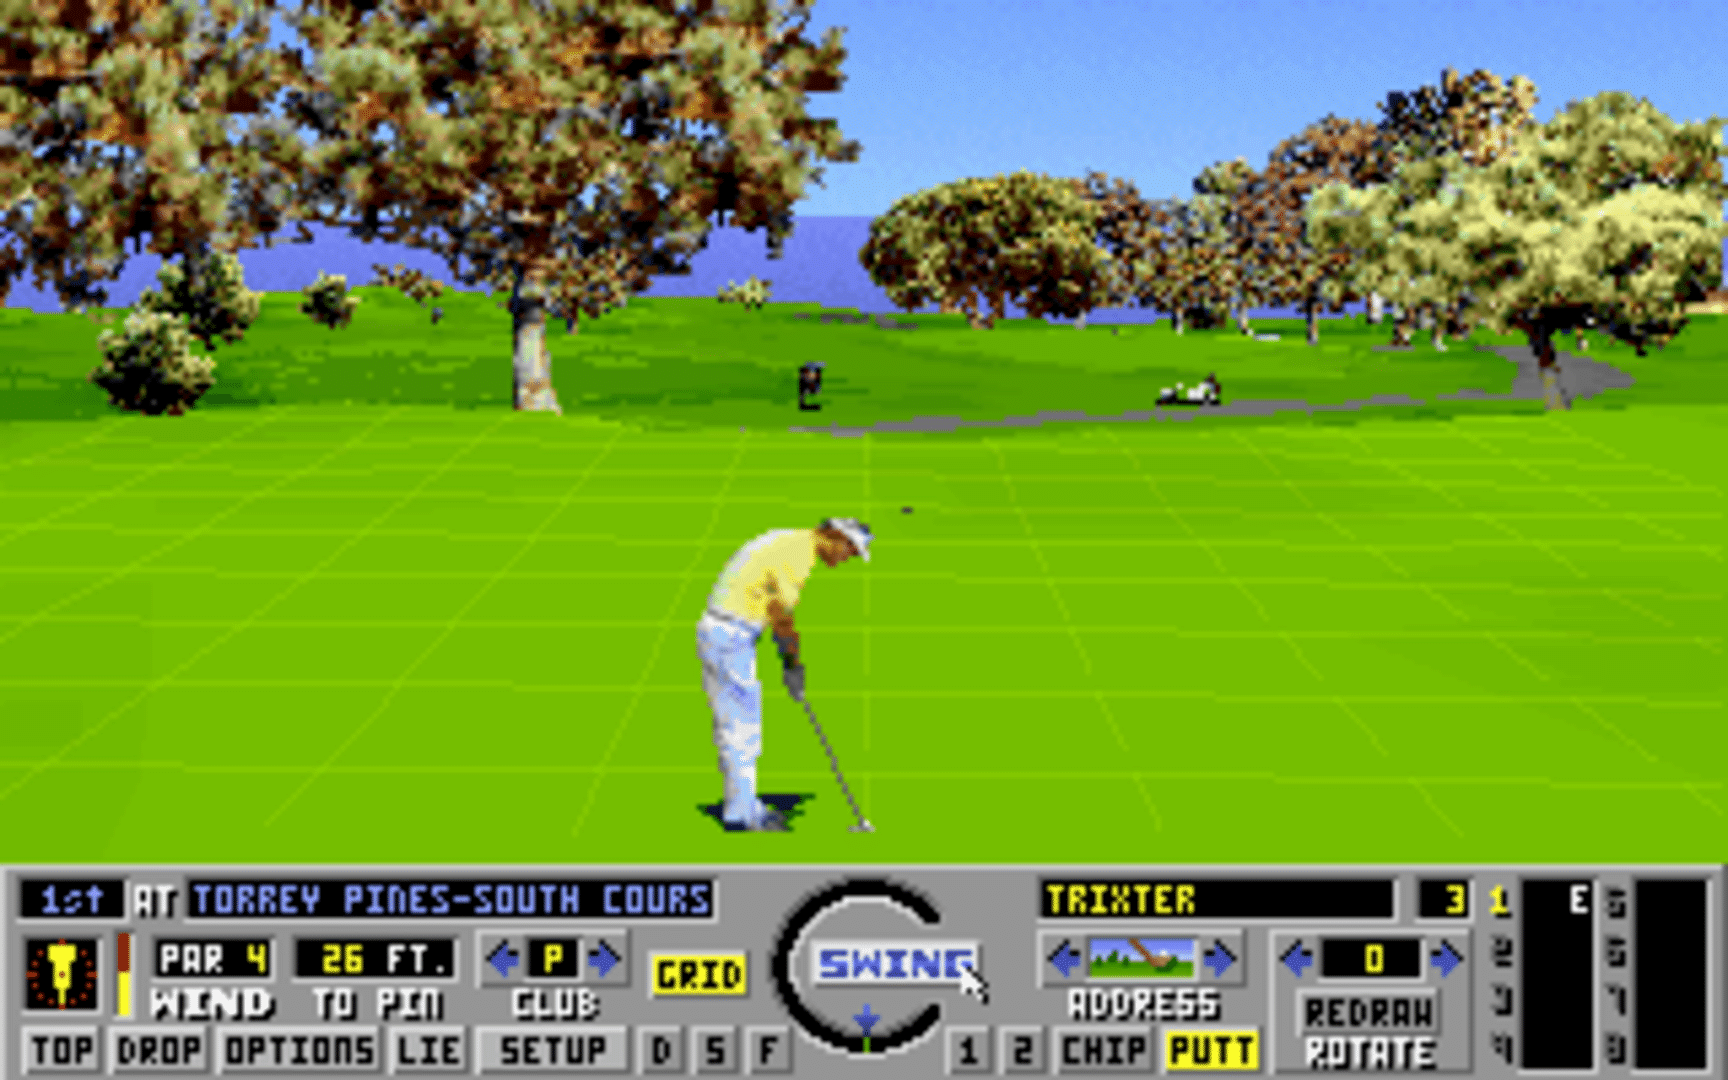 Links: The Challenge of Golf screenshot